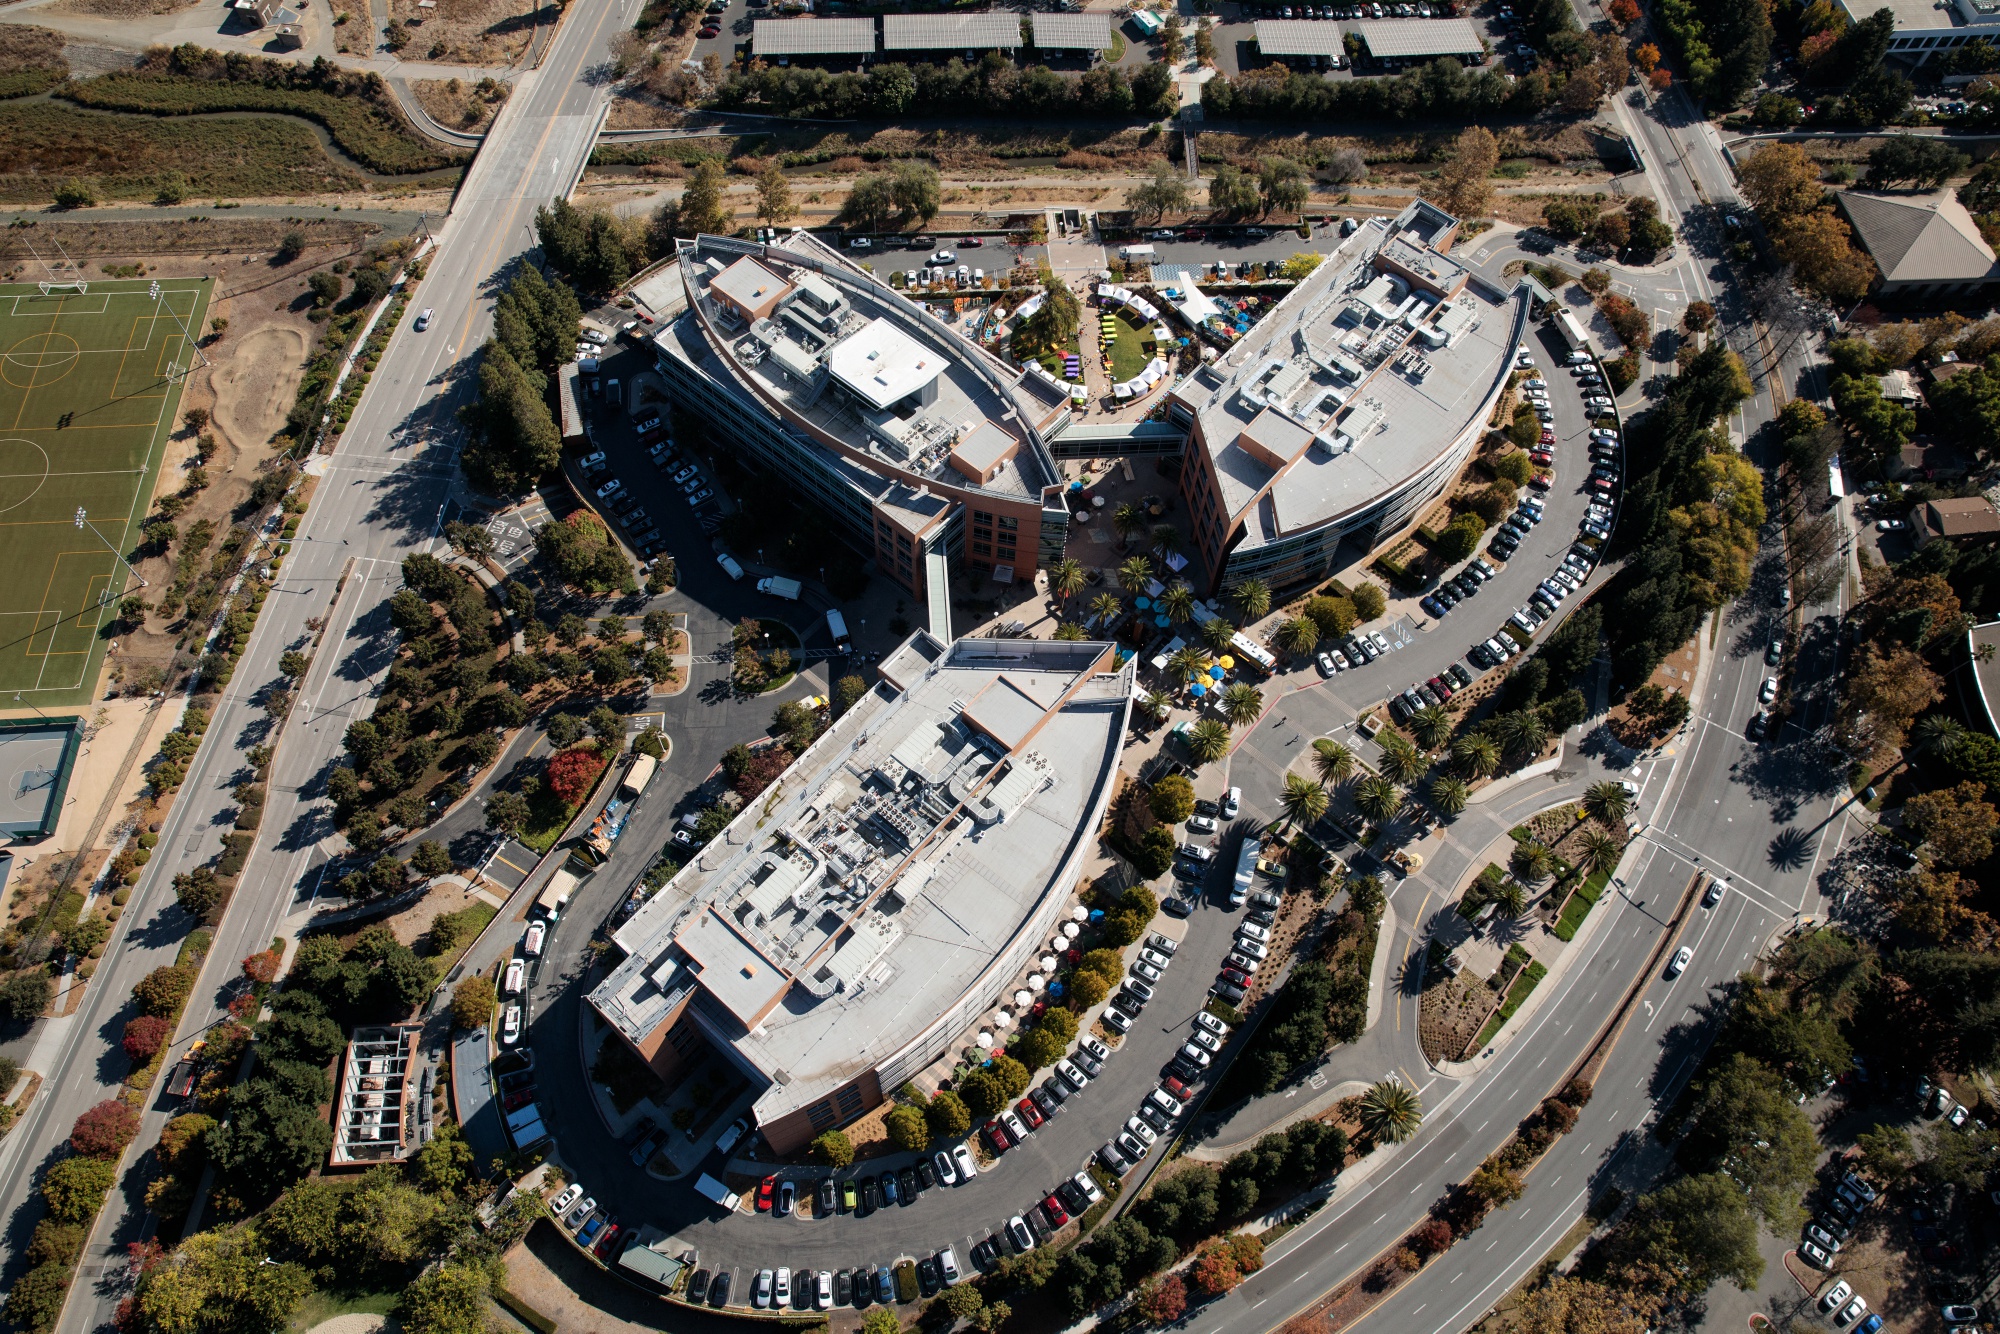 The Googleplex corporate headquarters building stands Mountain View, California, U.S.